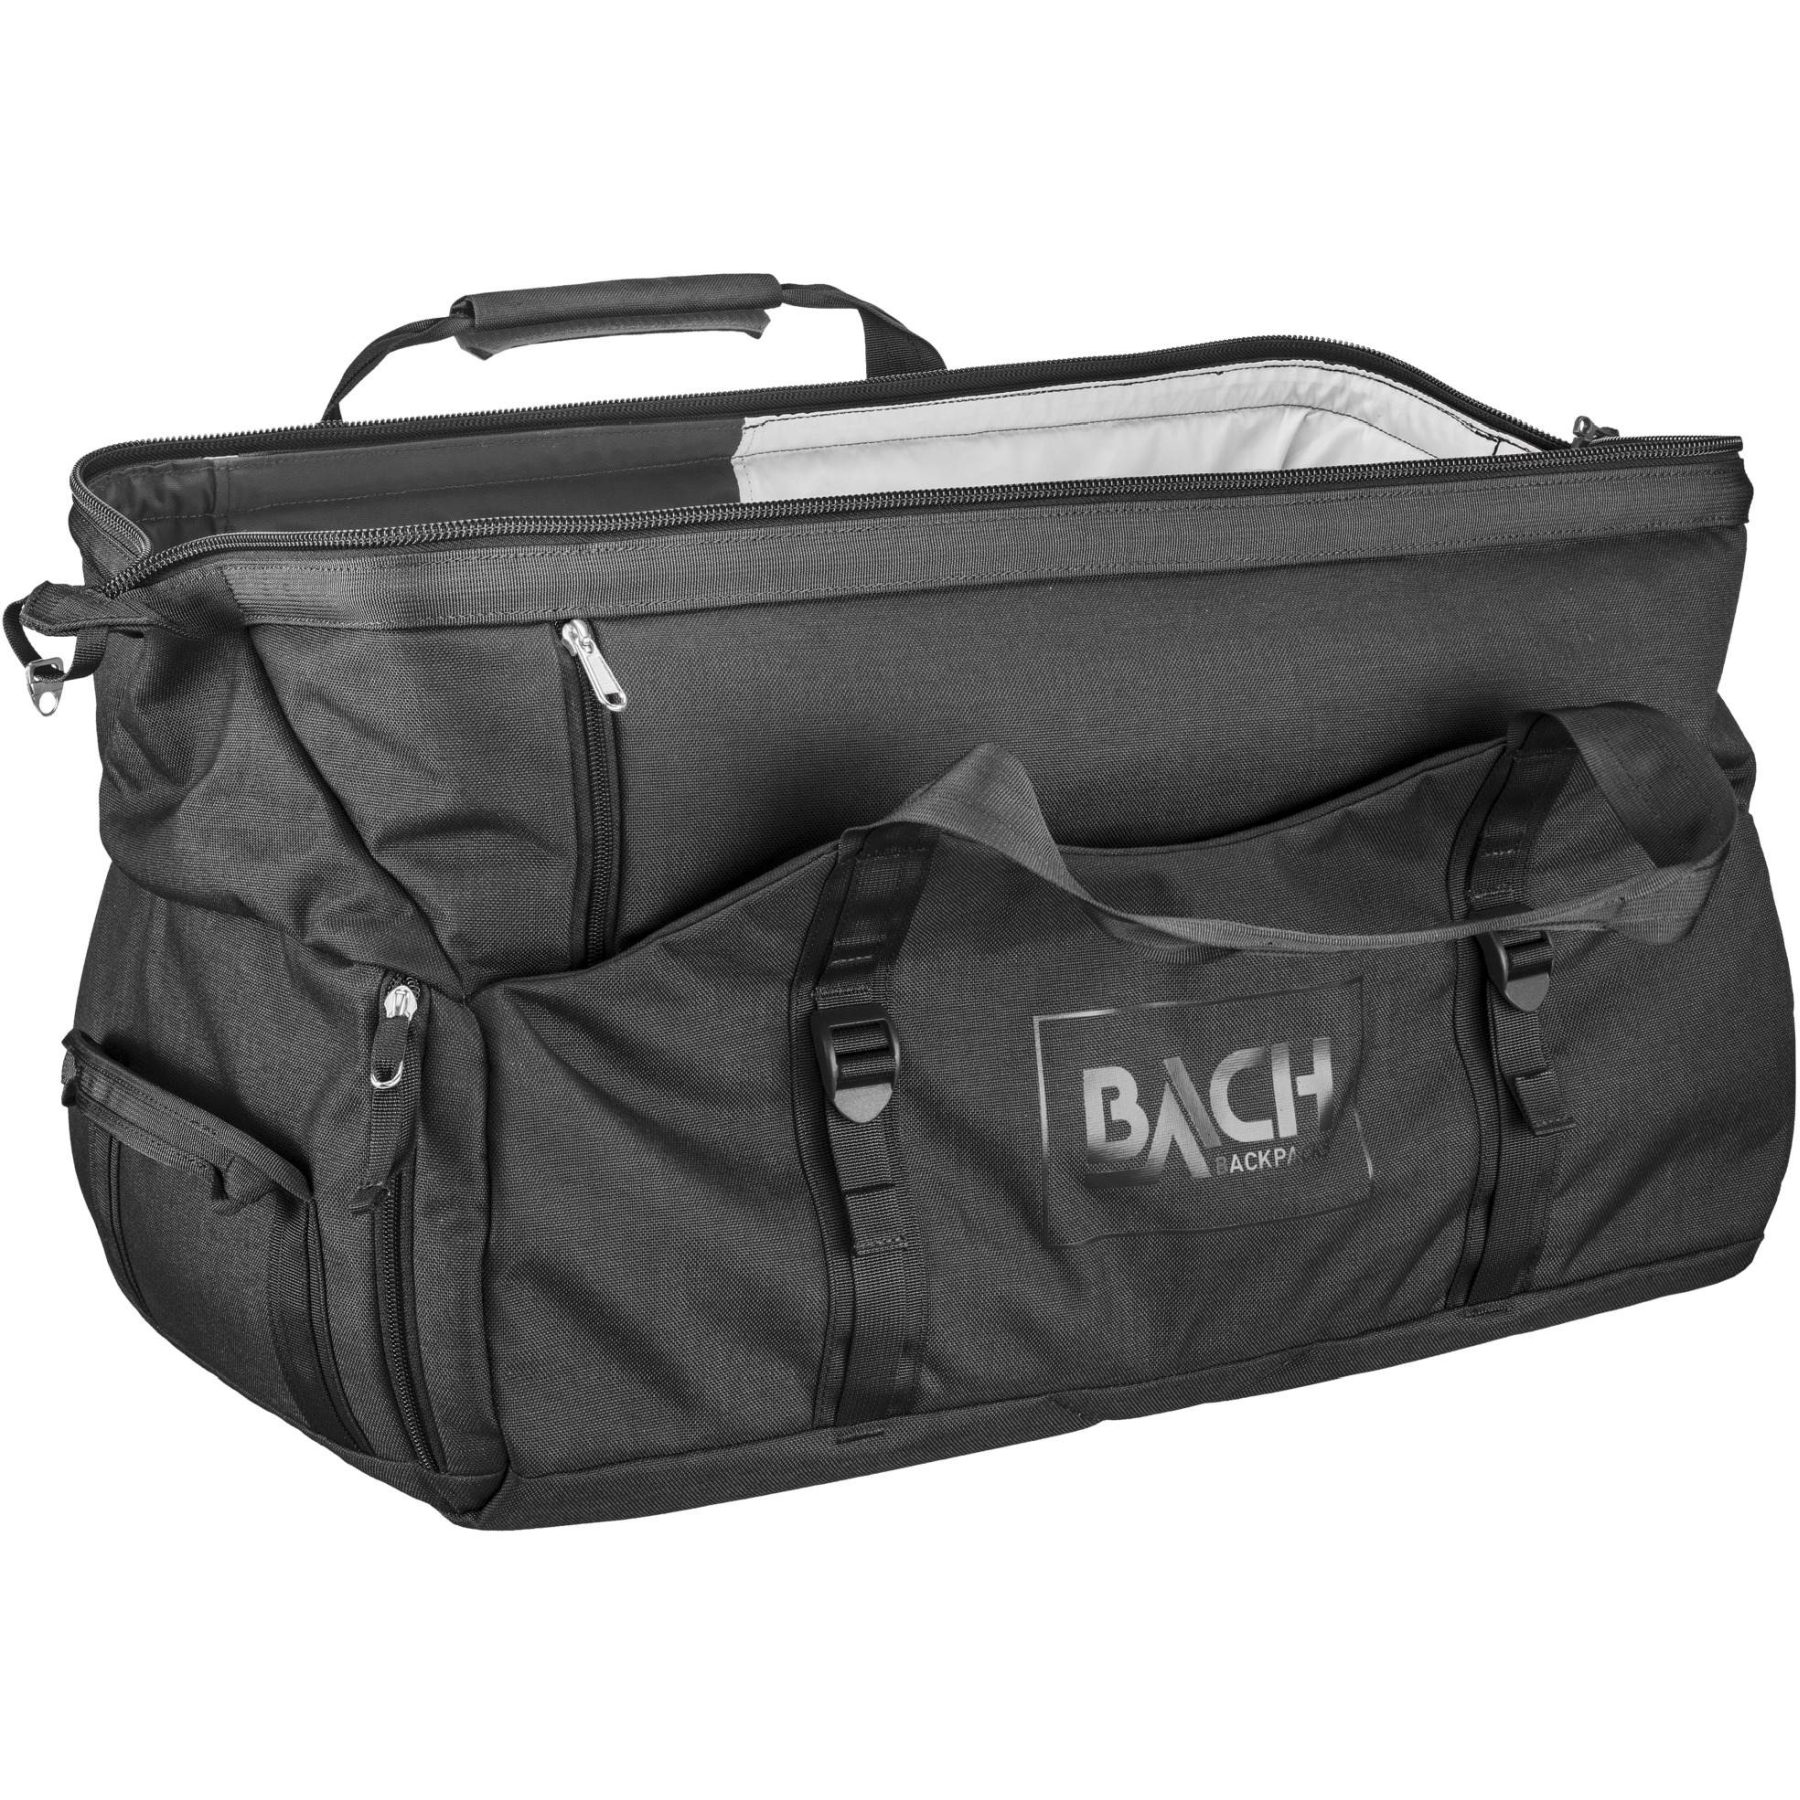 Bach Dr. Duffel 40 Travel Bag - black | BIKE24